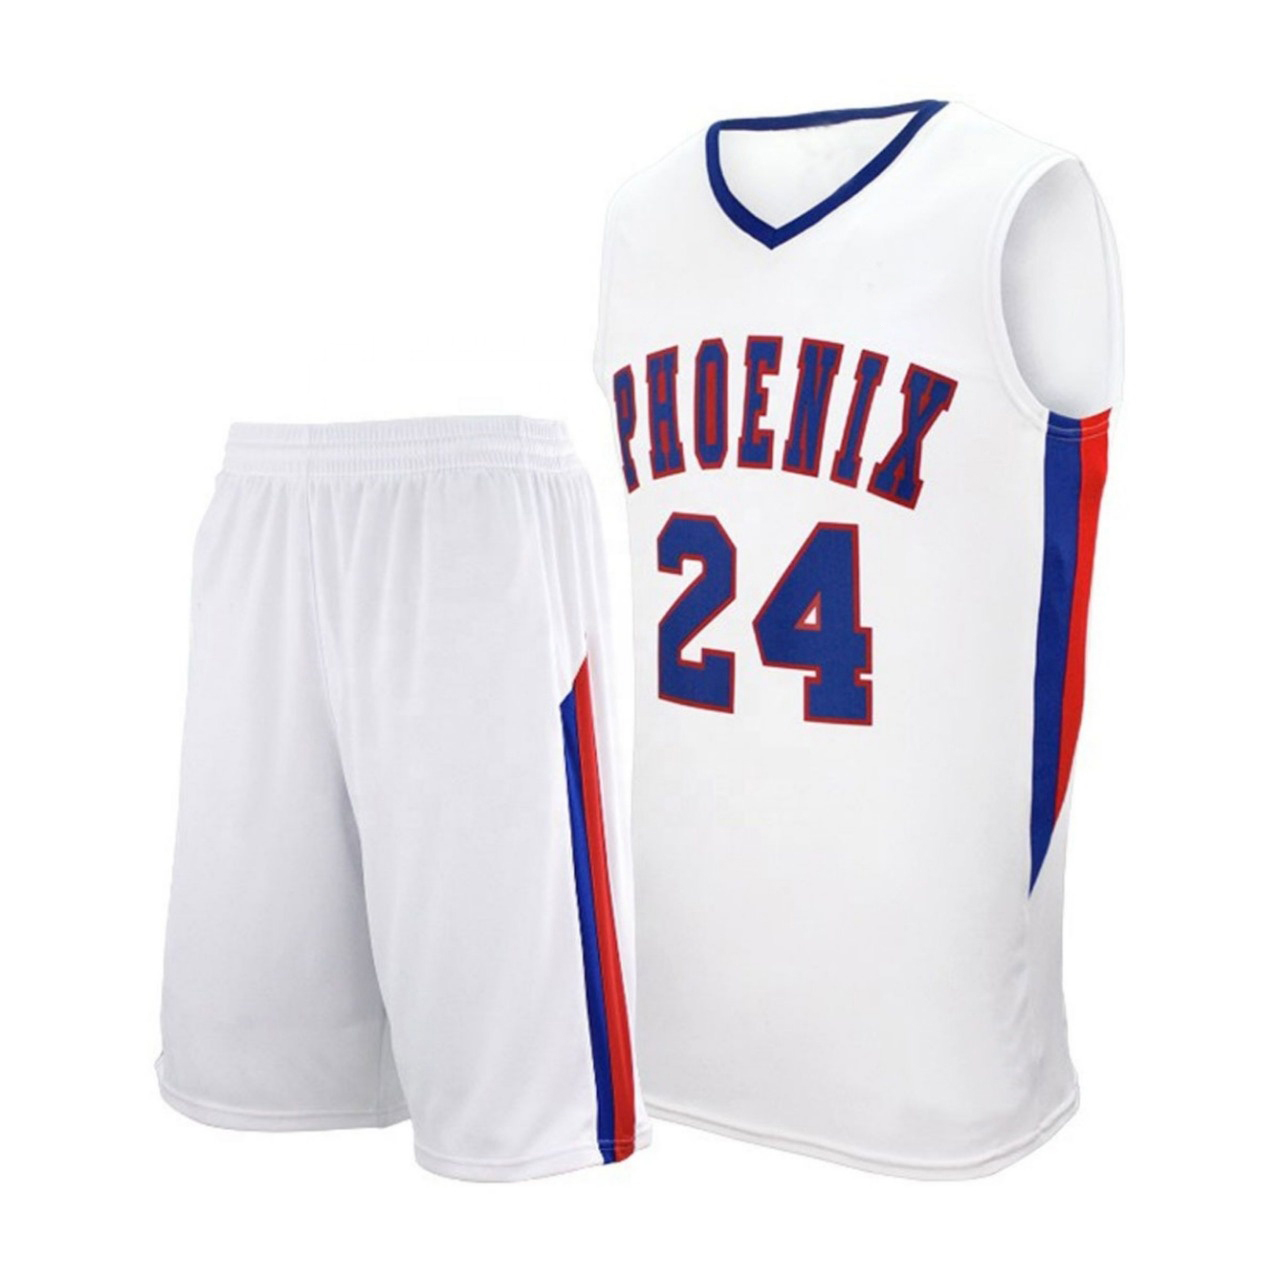 Custom Printed Basketball Uniform